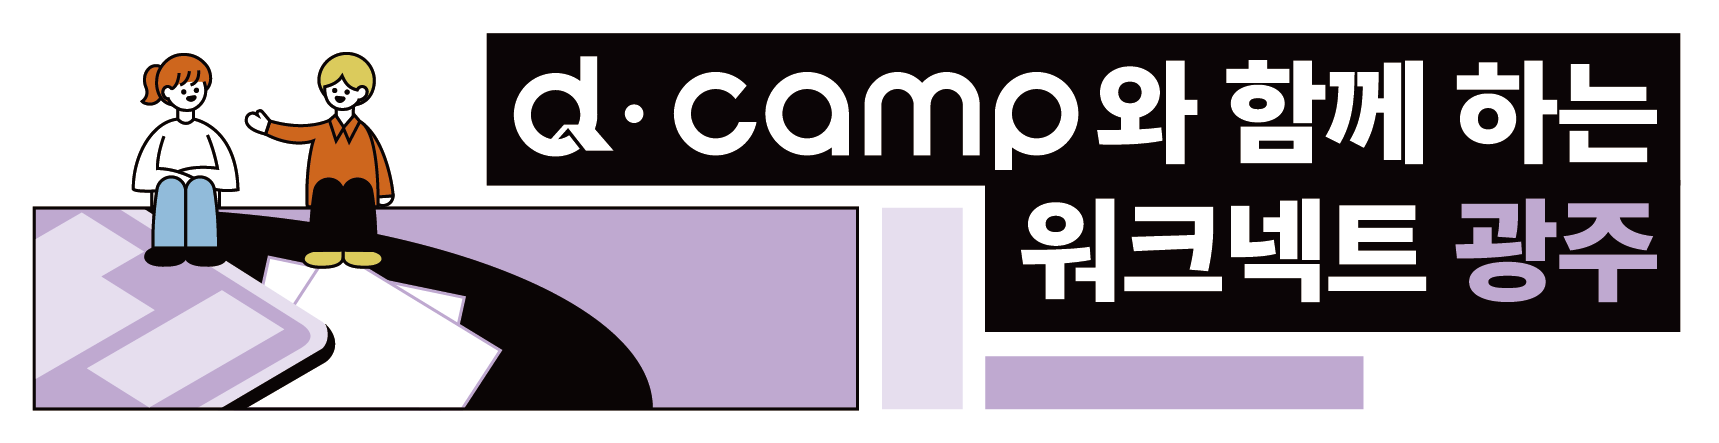 [d·camp] 헤더_9월 광주 워크넥트